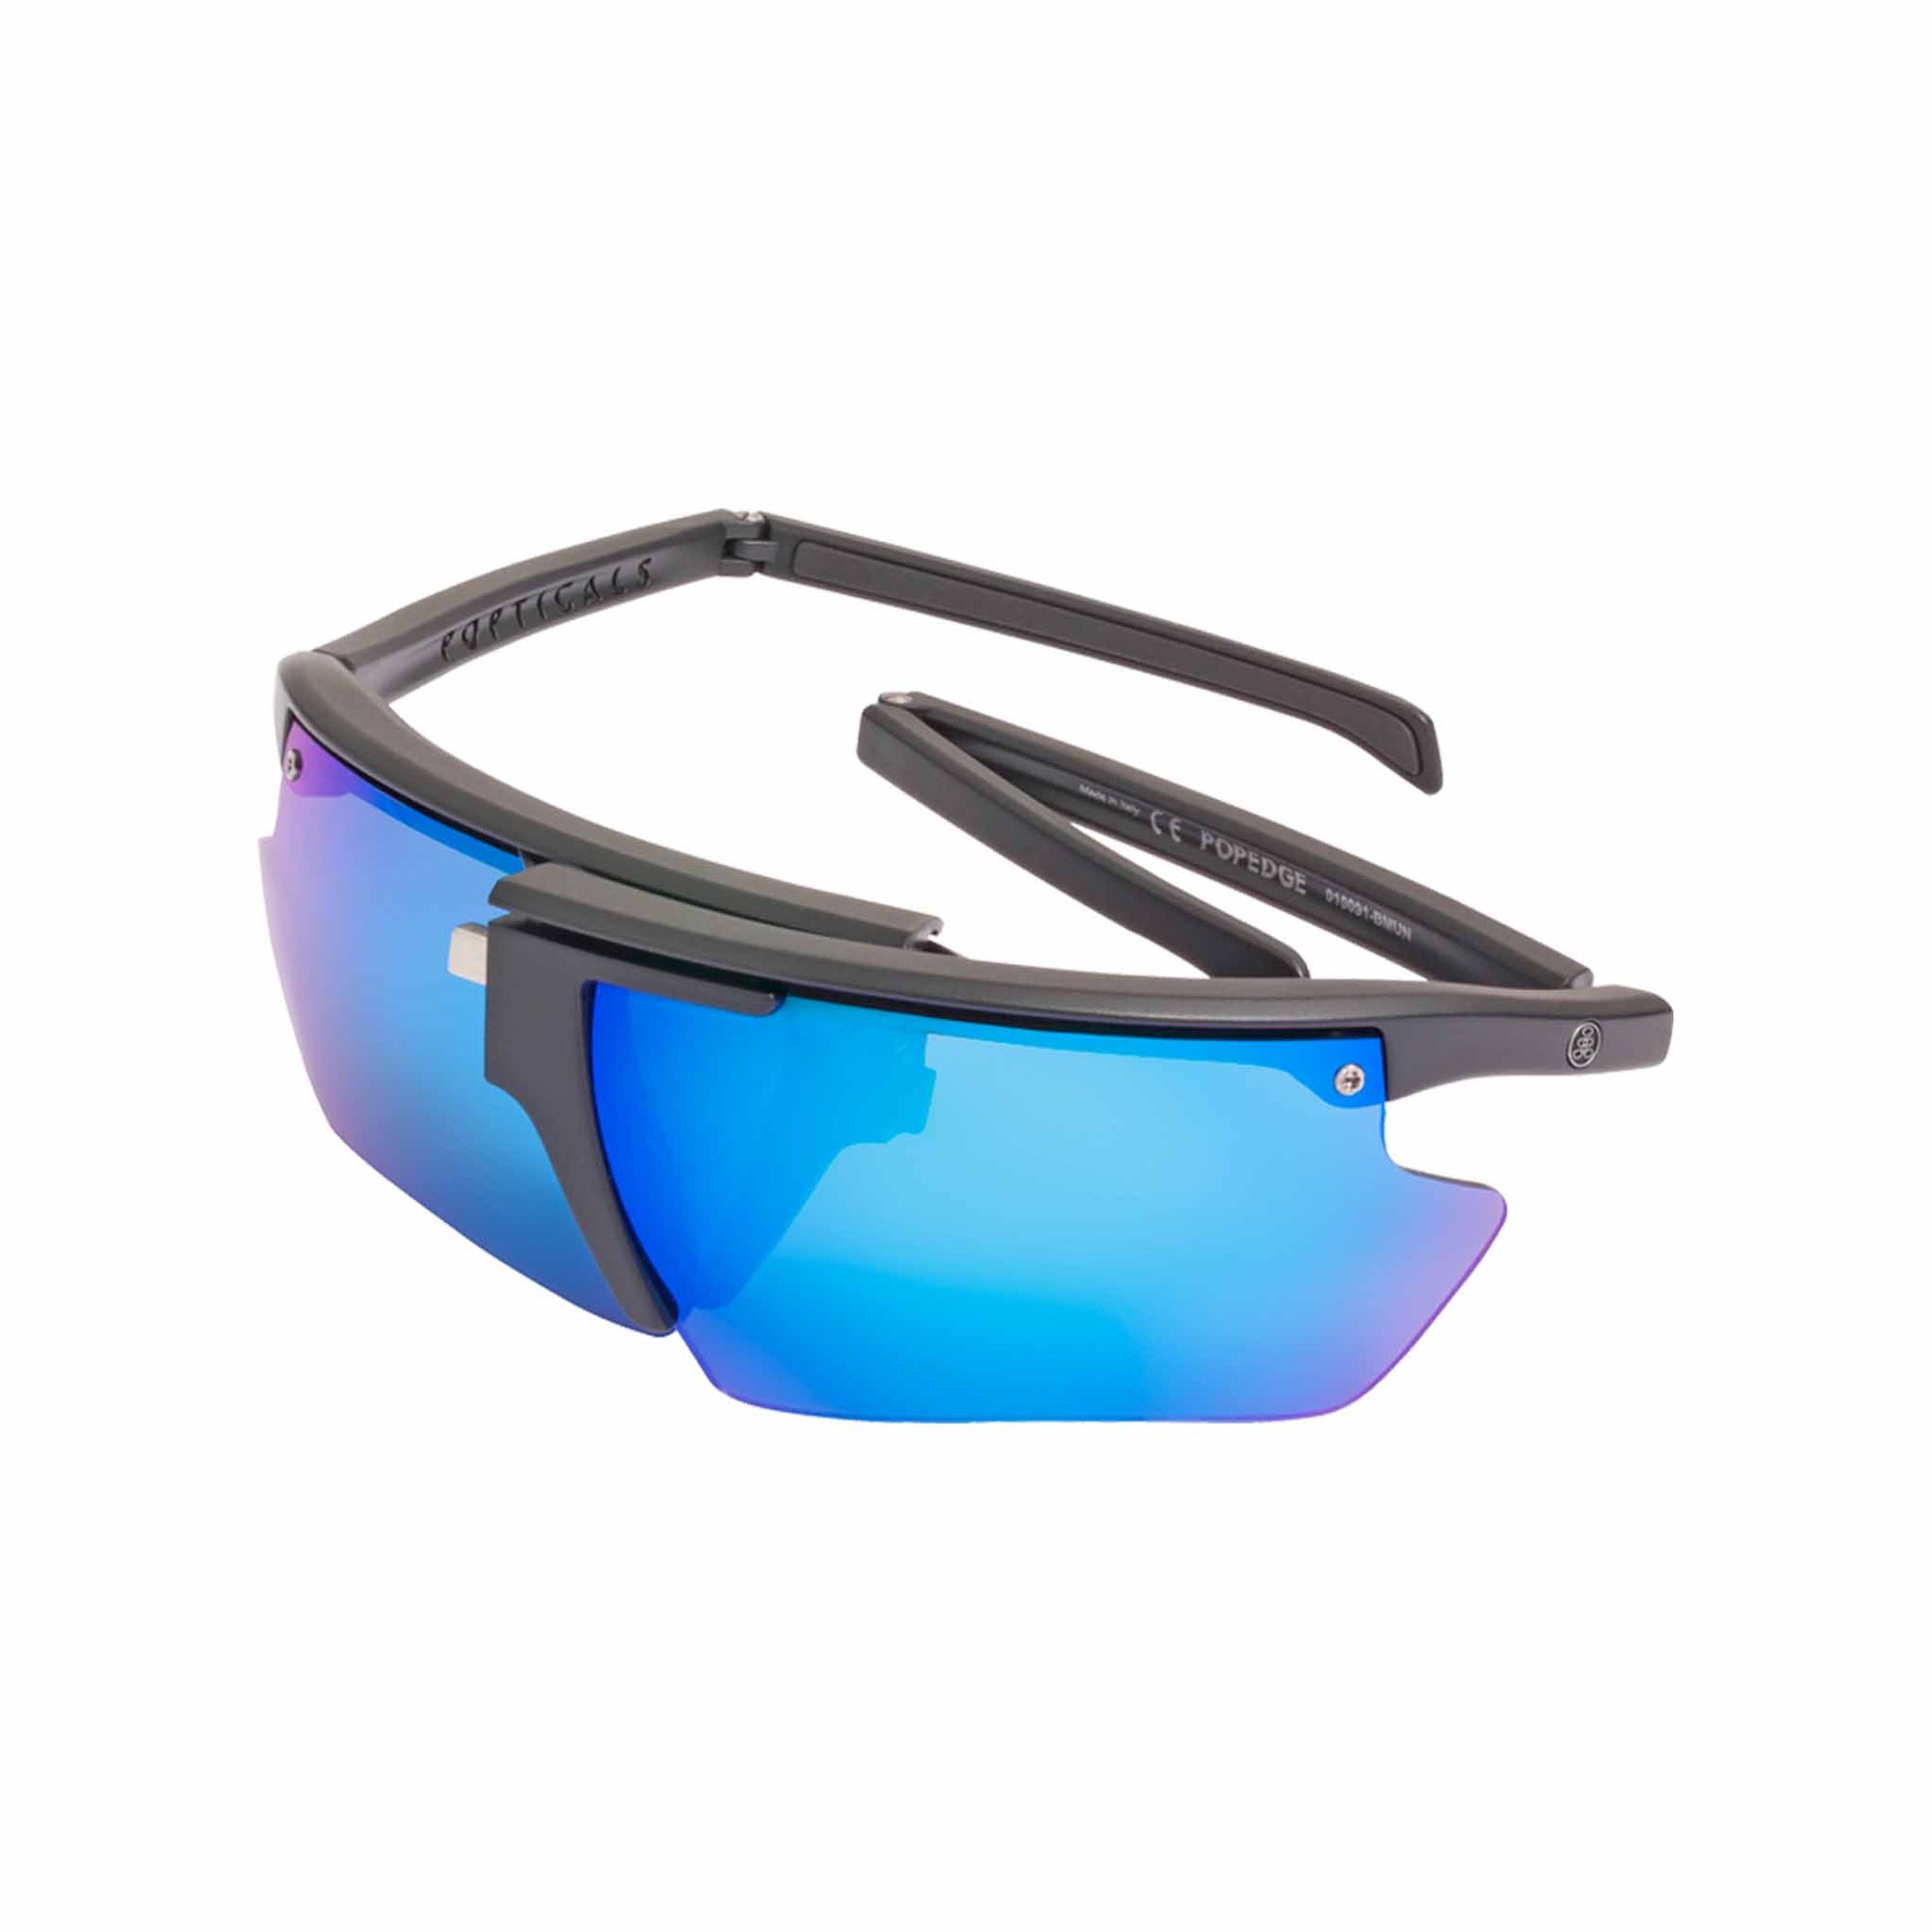 Popticals, Premium Compact Sunglasses, PopEdge, 010091-BMUN, Polarized Sunglasses, Matte Black Frame, Gray Lenses with Blue Mirror Finish, Glam View